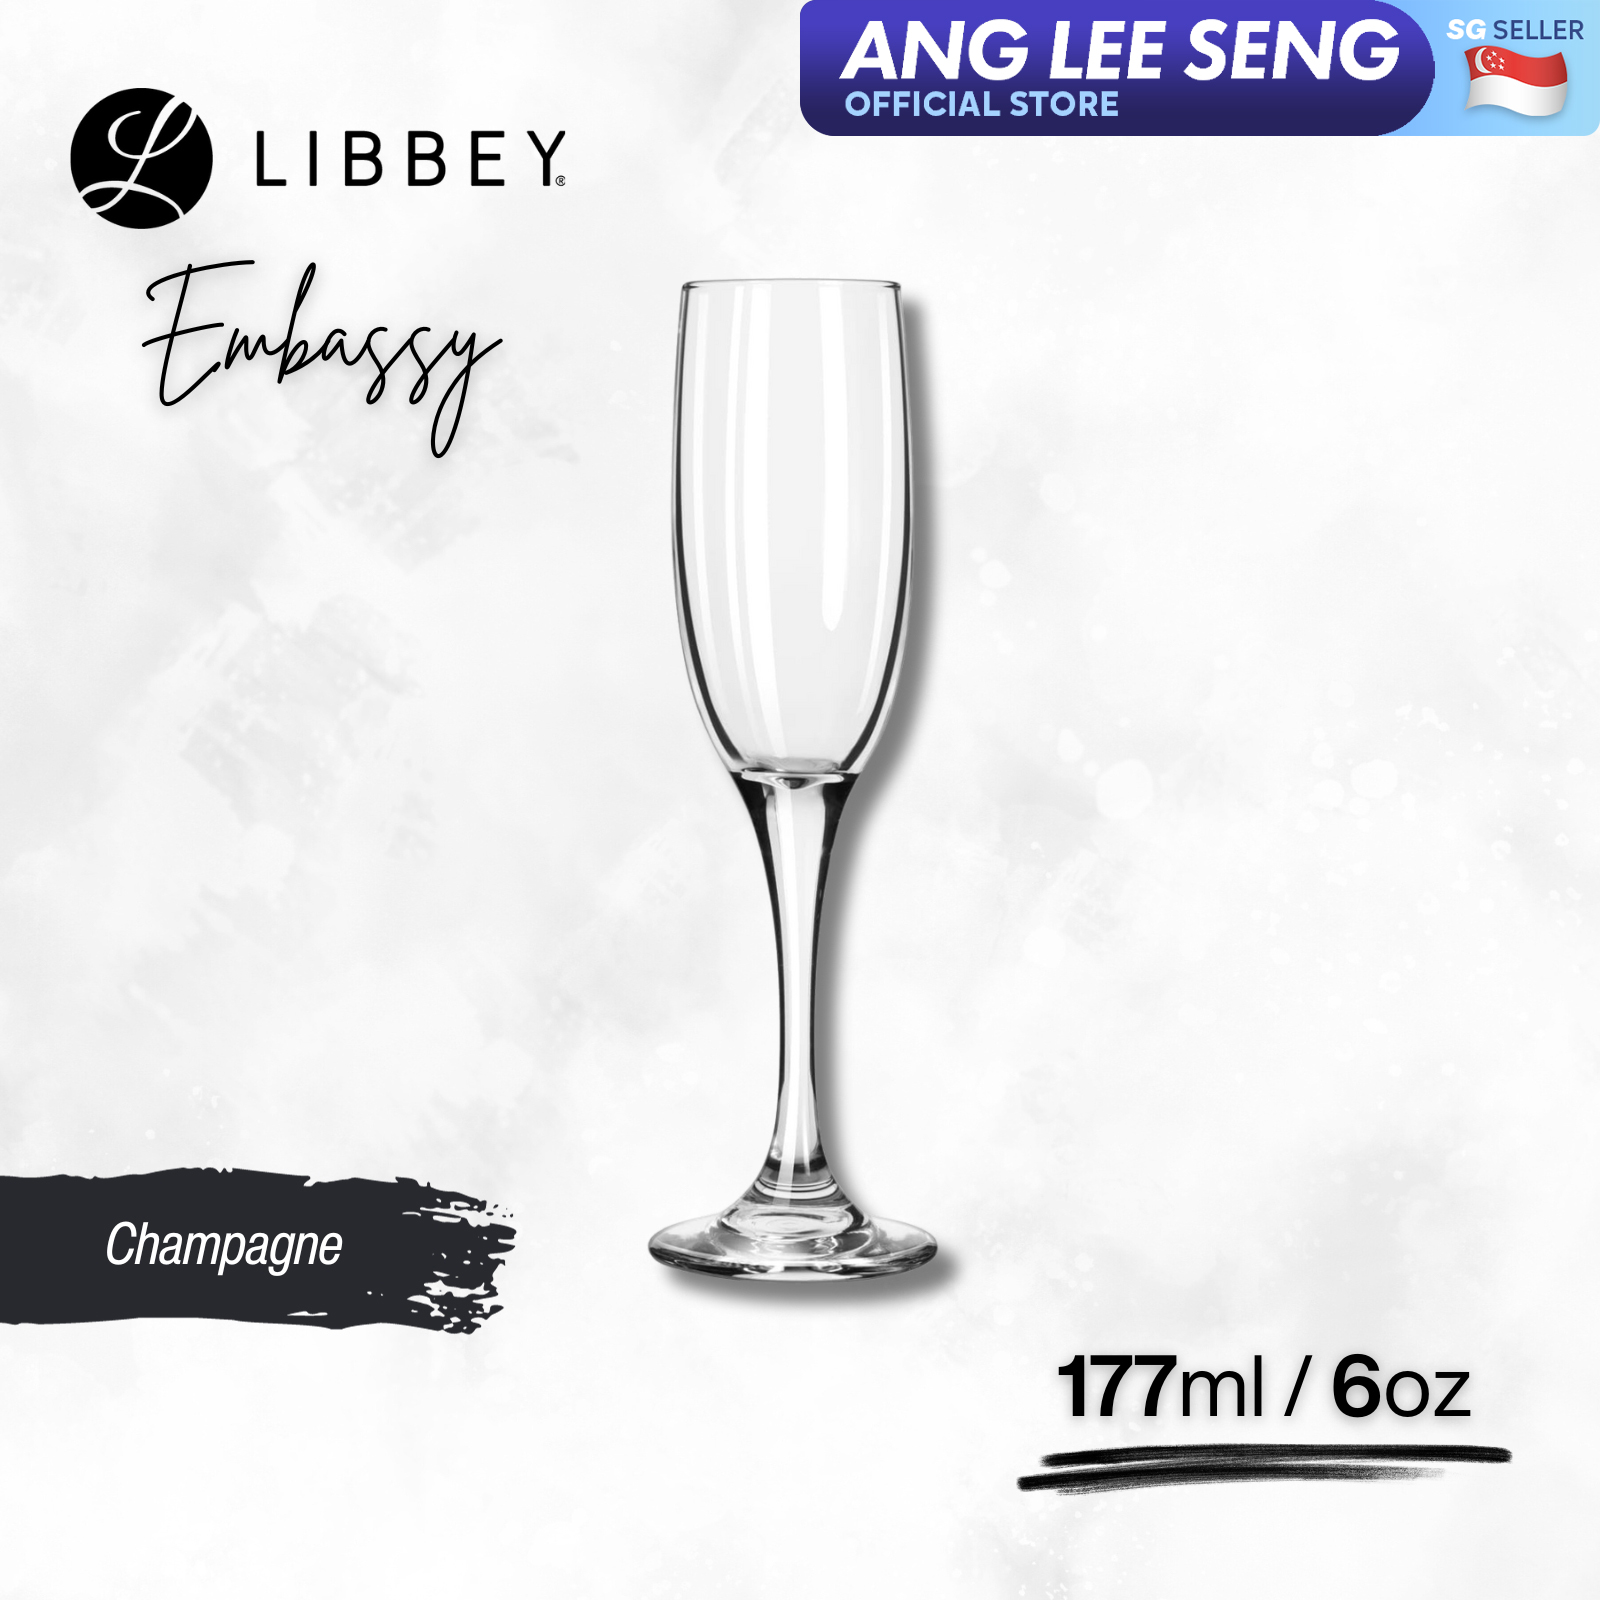 Libbey Embassy 3796 Glass Champagne Flute 177ml/6oz, 2-pc Set